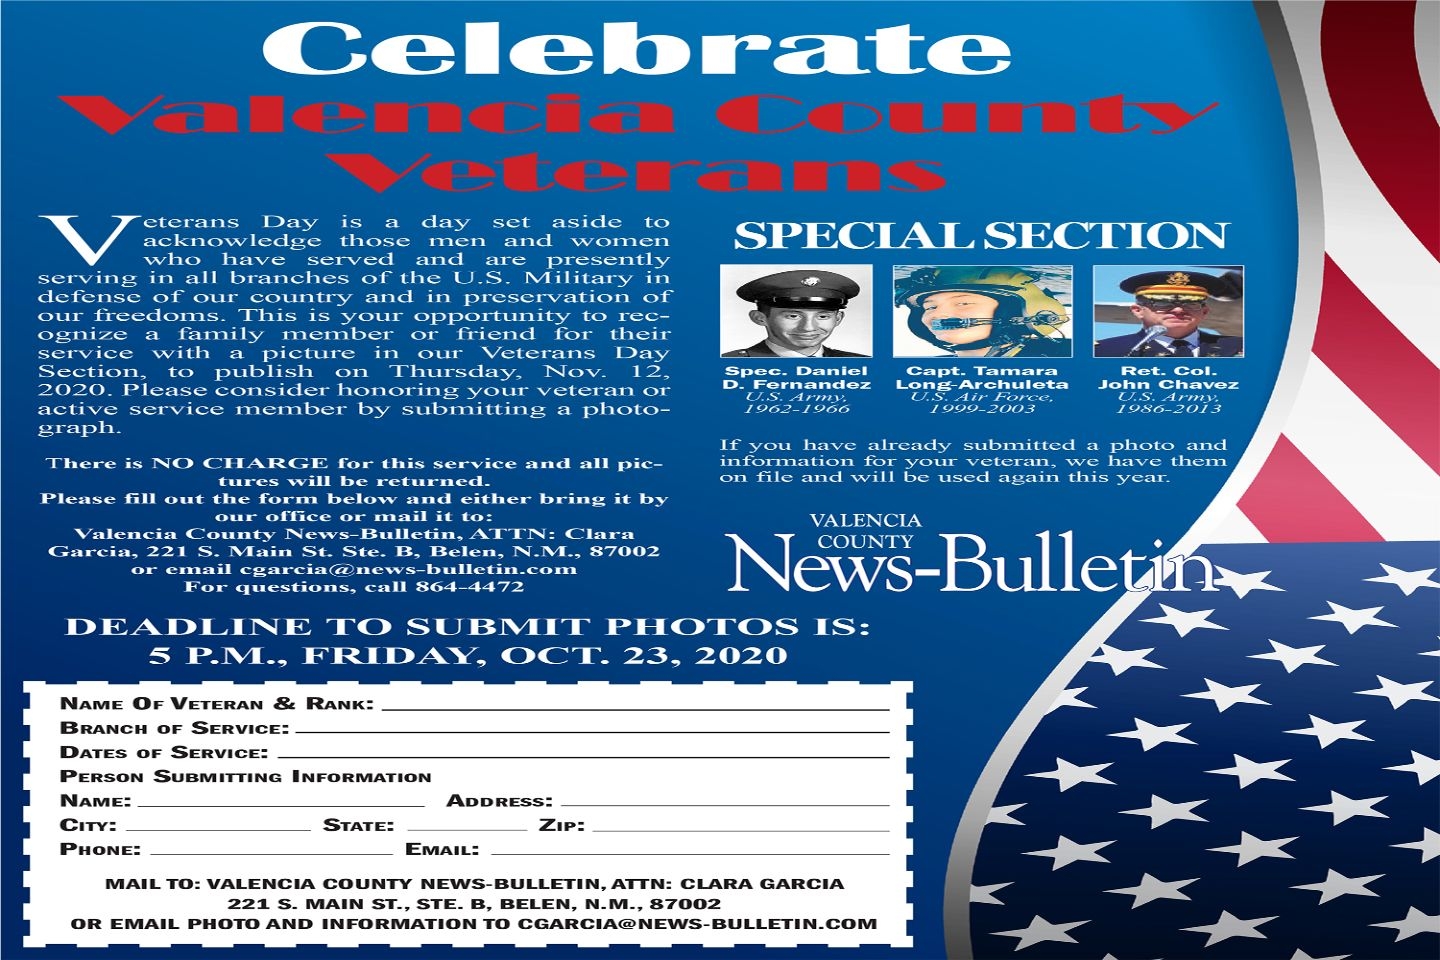 Valencia County News-Bulletin Celebrates Valencia Count Veterans